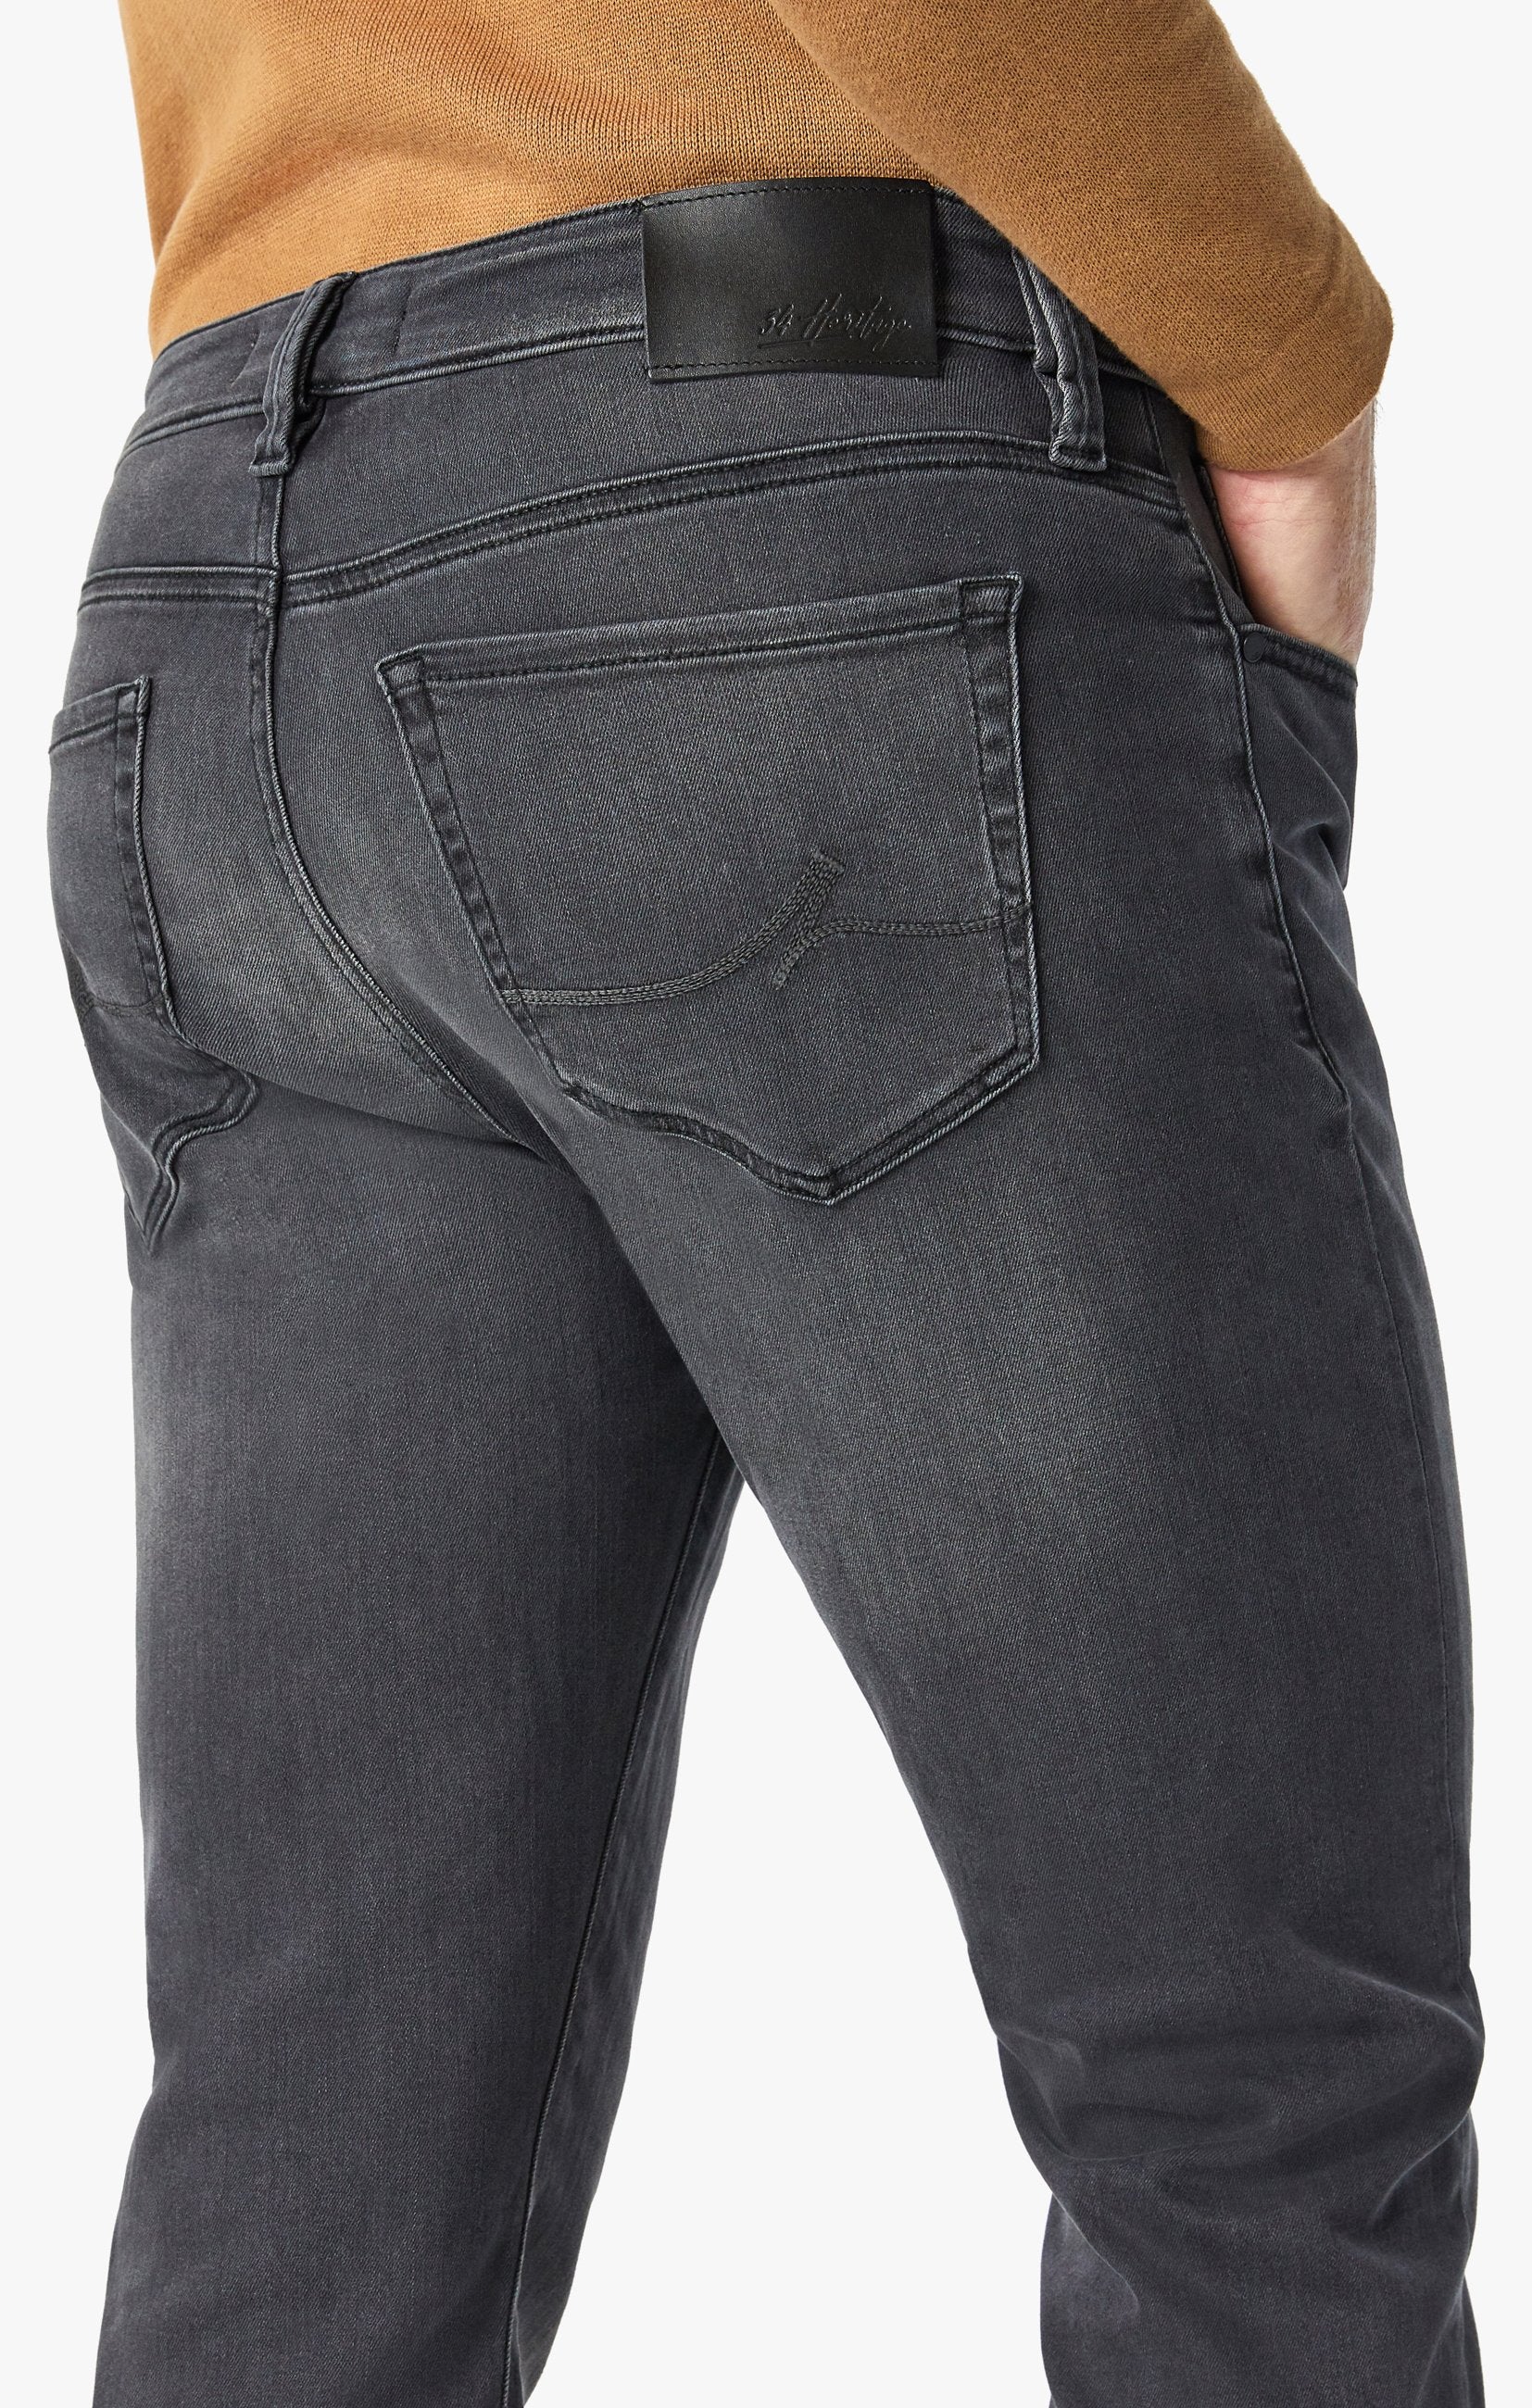 mevan Slim Men Dark Grey Jeans - Buy mevan Slim Men Dark Grey Jeans Online  at Best Prices in India | Flipkart.com